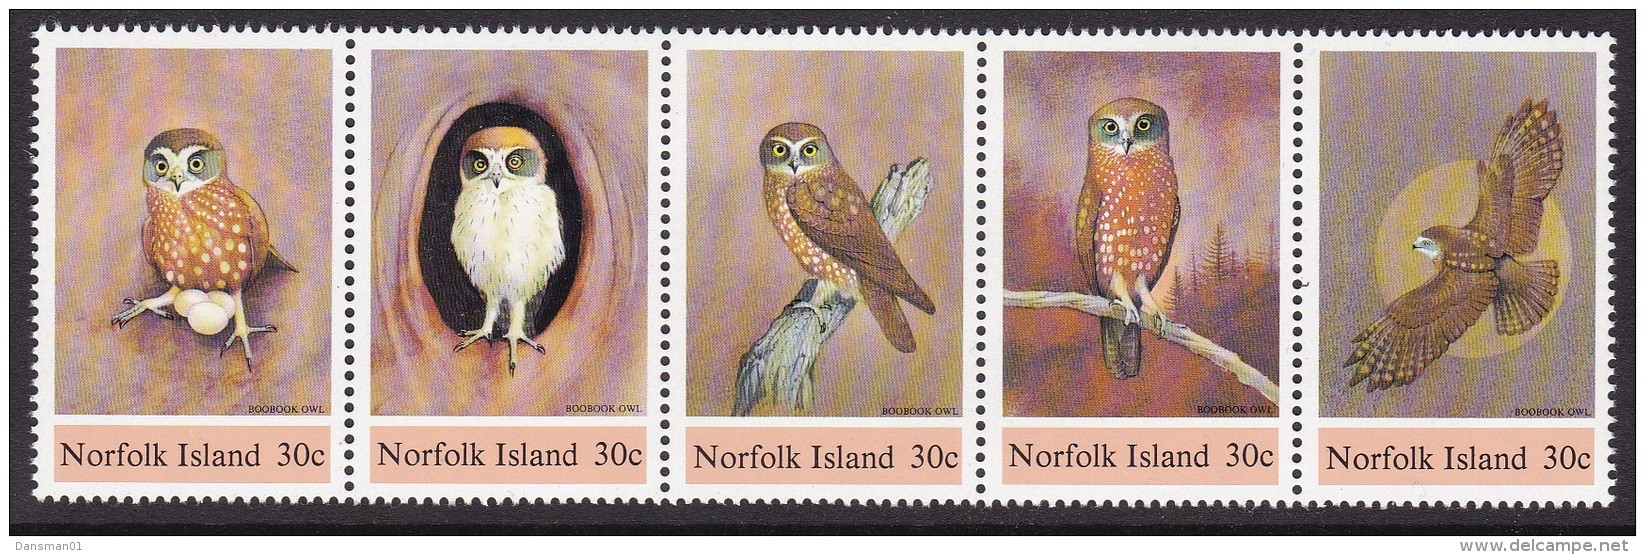 Norfolk Island 1984 Babook Owl Sc 343 Mint Never Hinged - Isola Norfolk